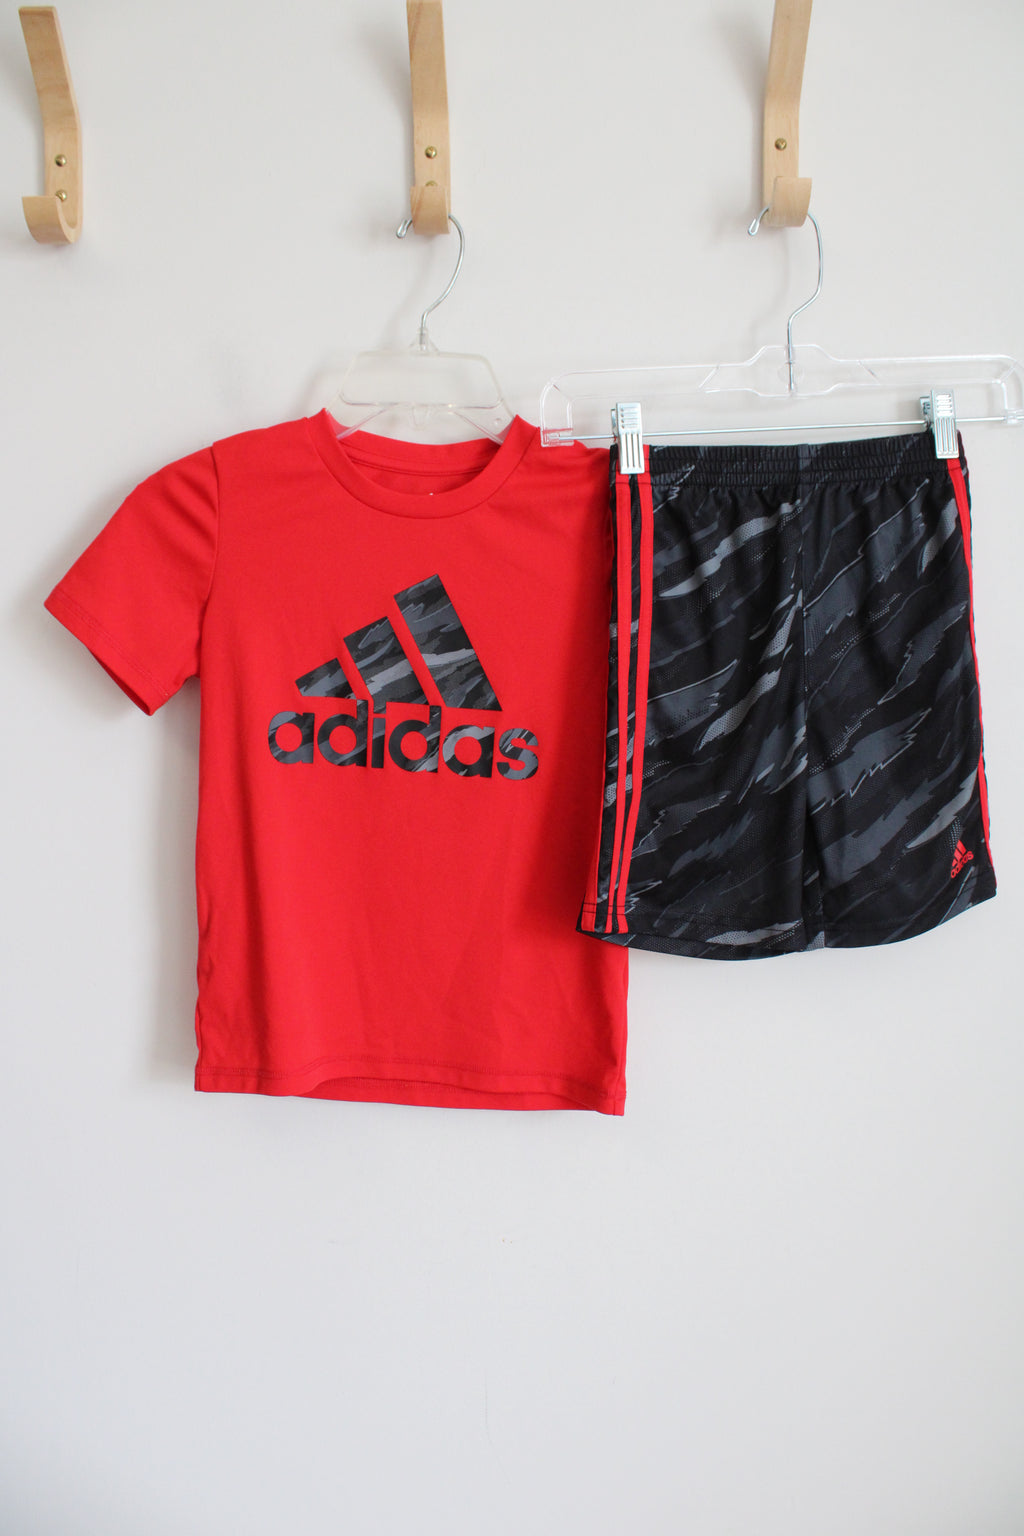 Adidas Red Black Shorts & Tee Set | 6